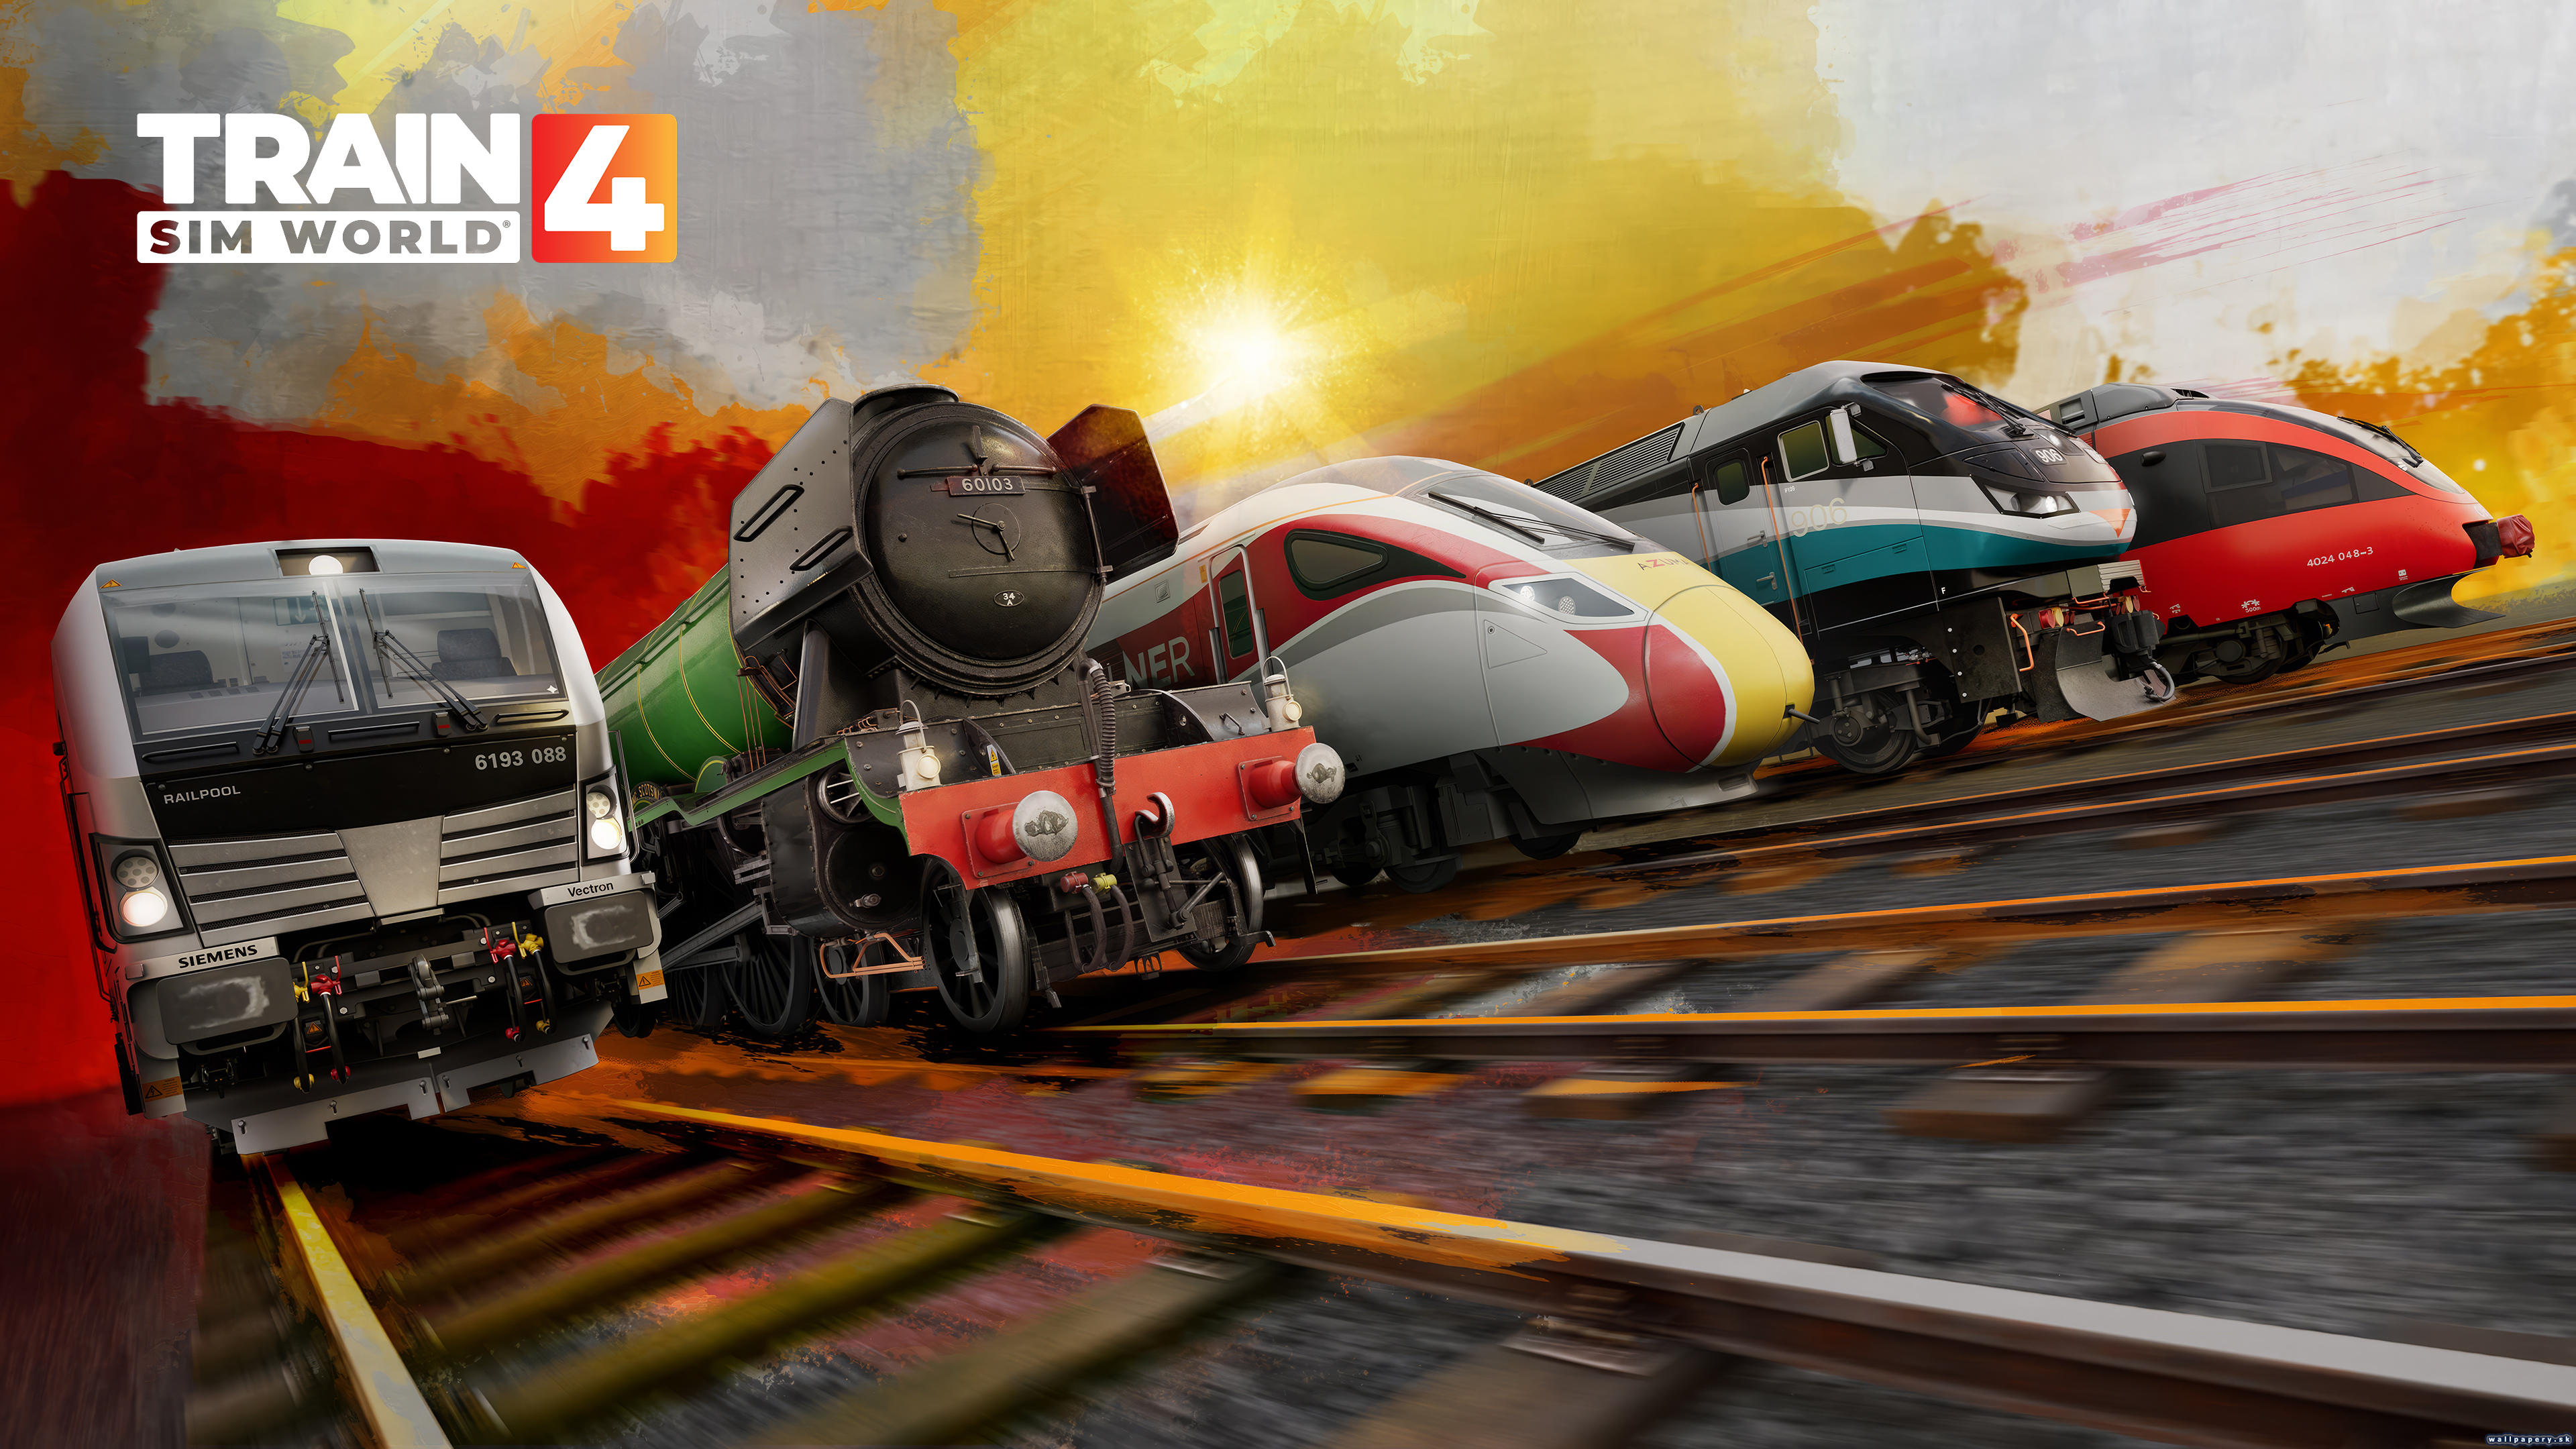 Train Sim World 4 - wallpaper 2